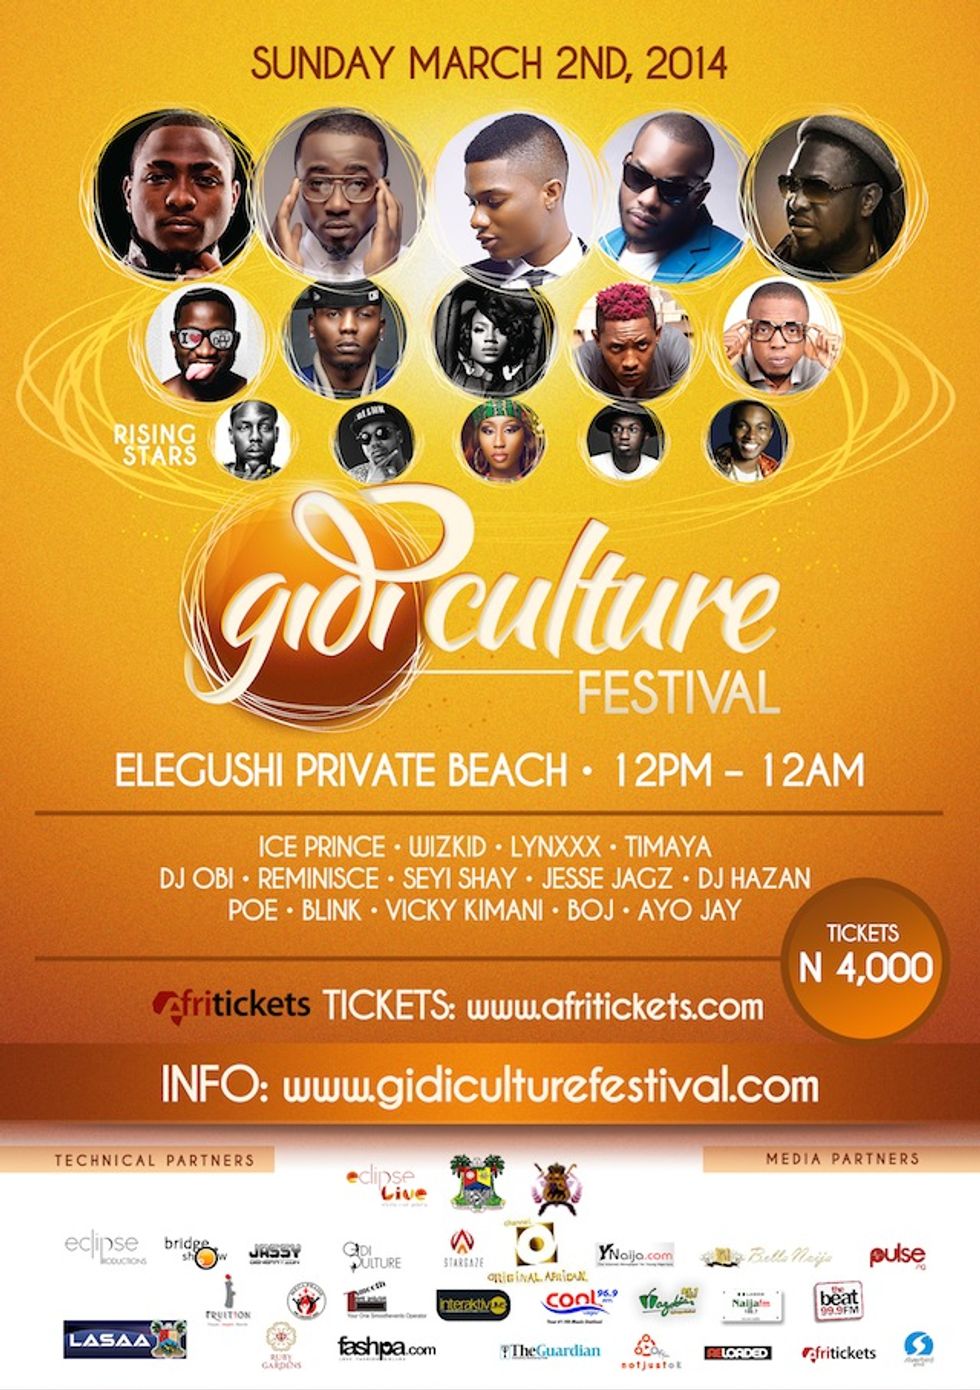 The Inaugural Gidi Culture Festival Hits Lagos This March